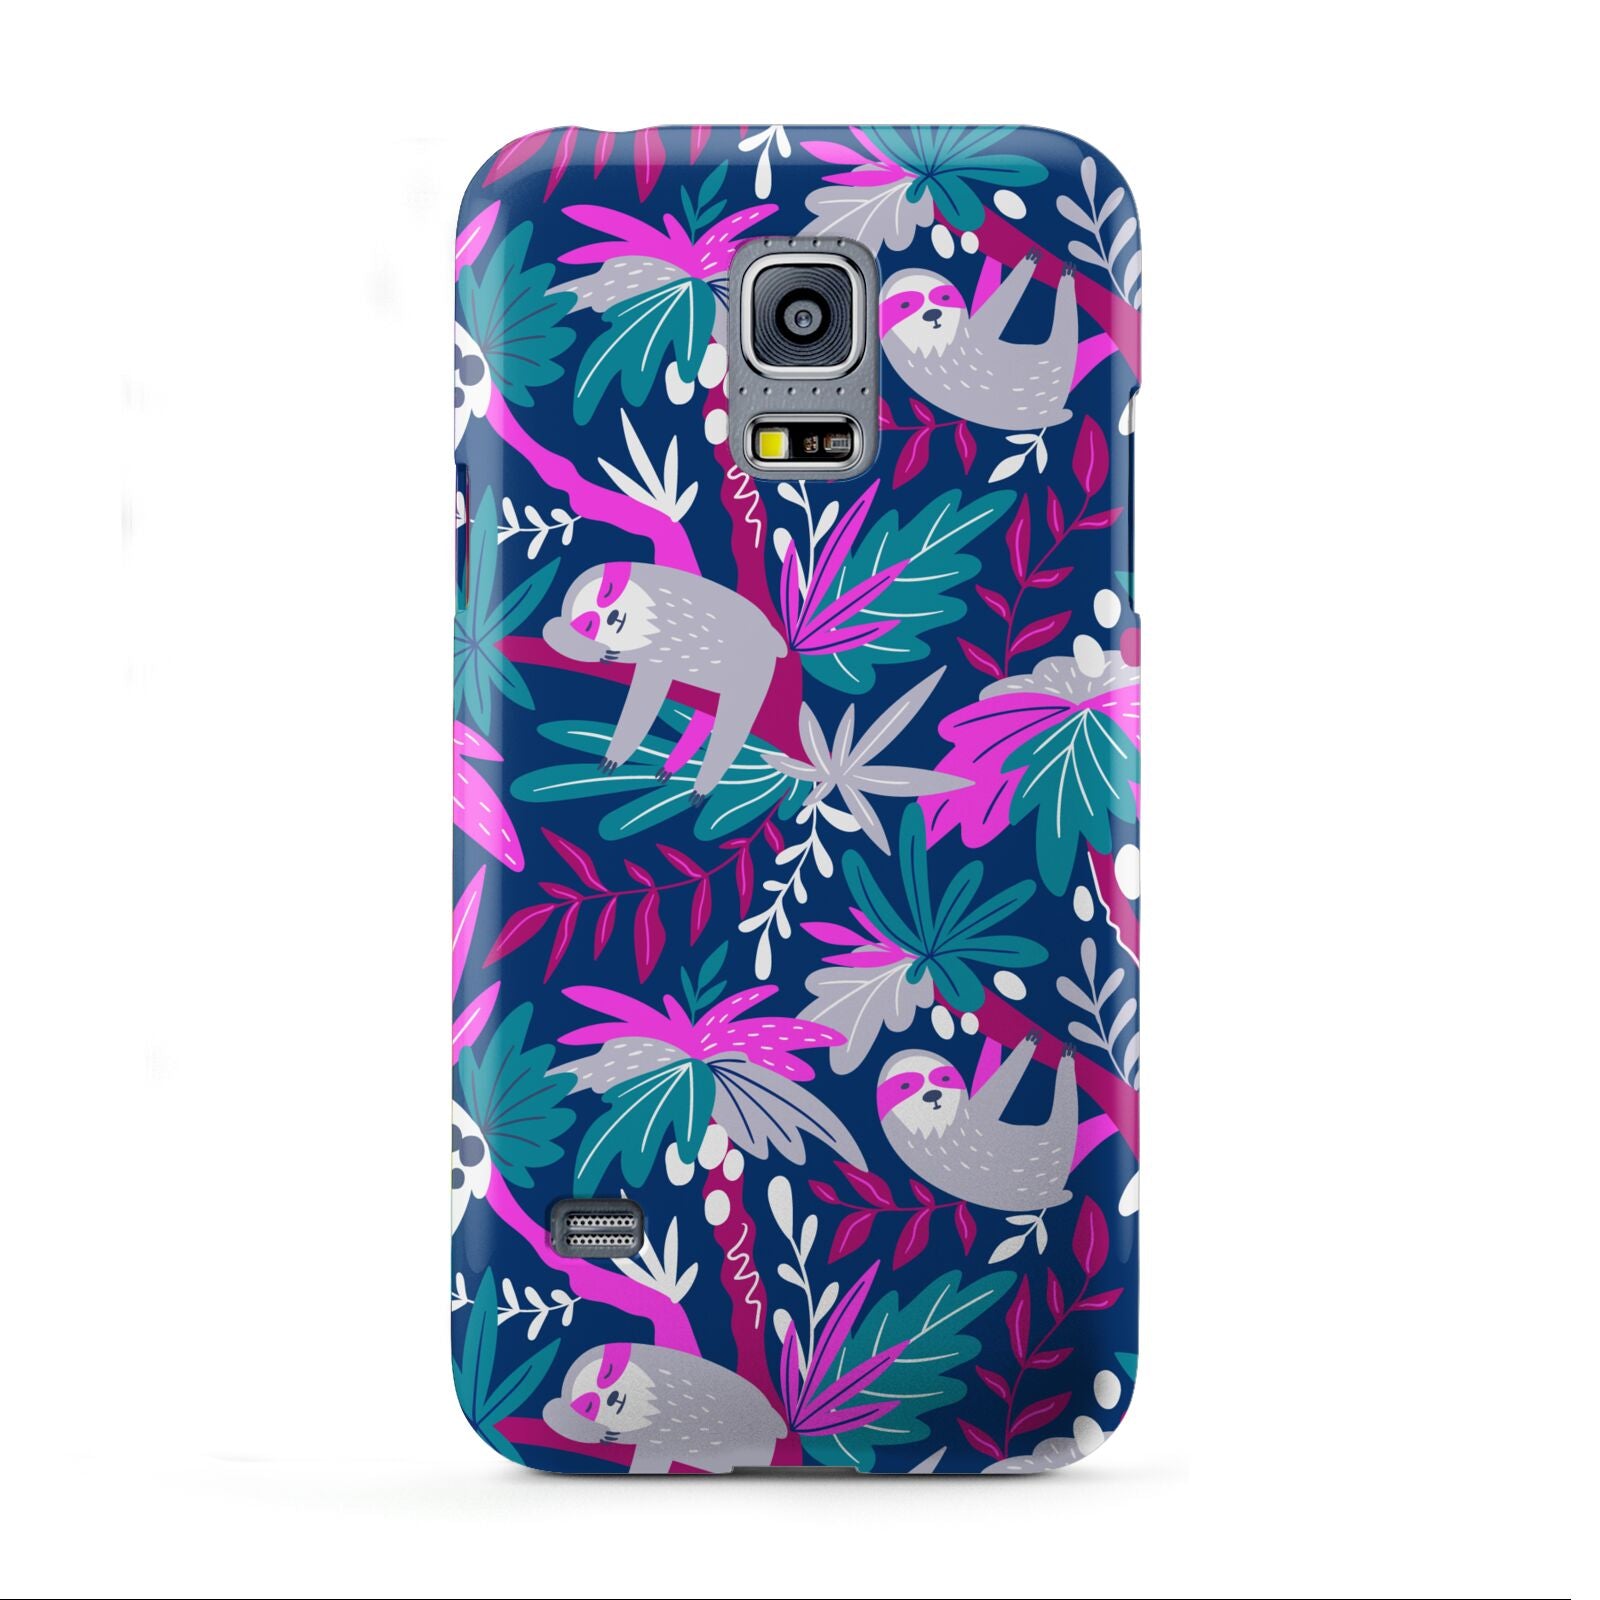 Sloth Samsung Galaxy S5 Mini Case